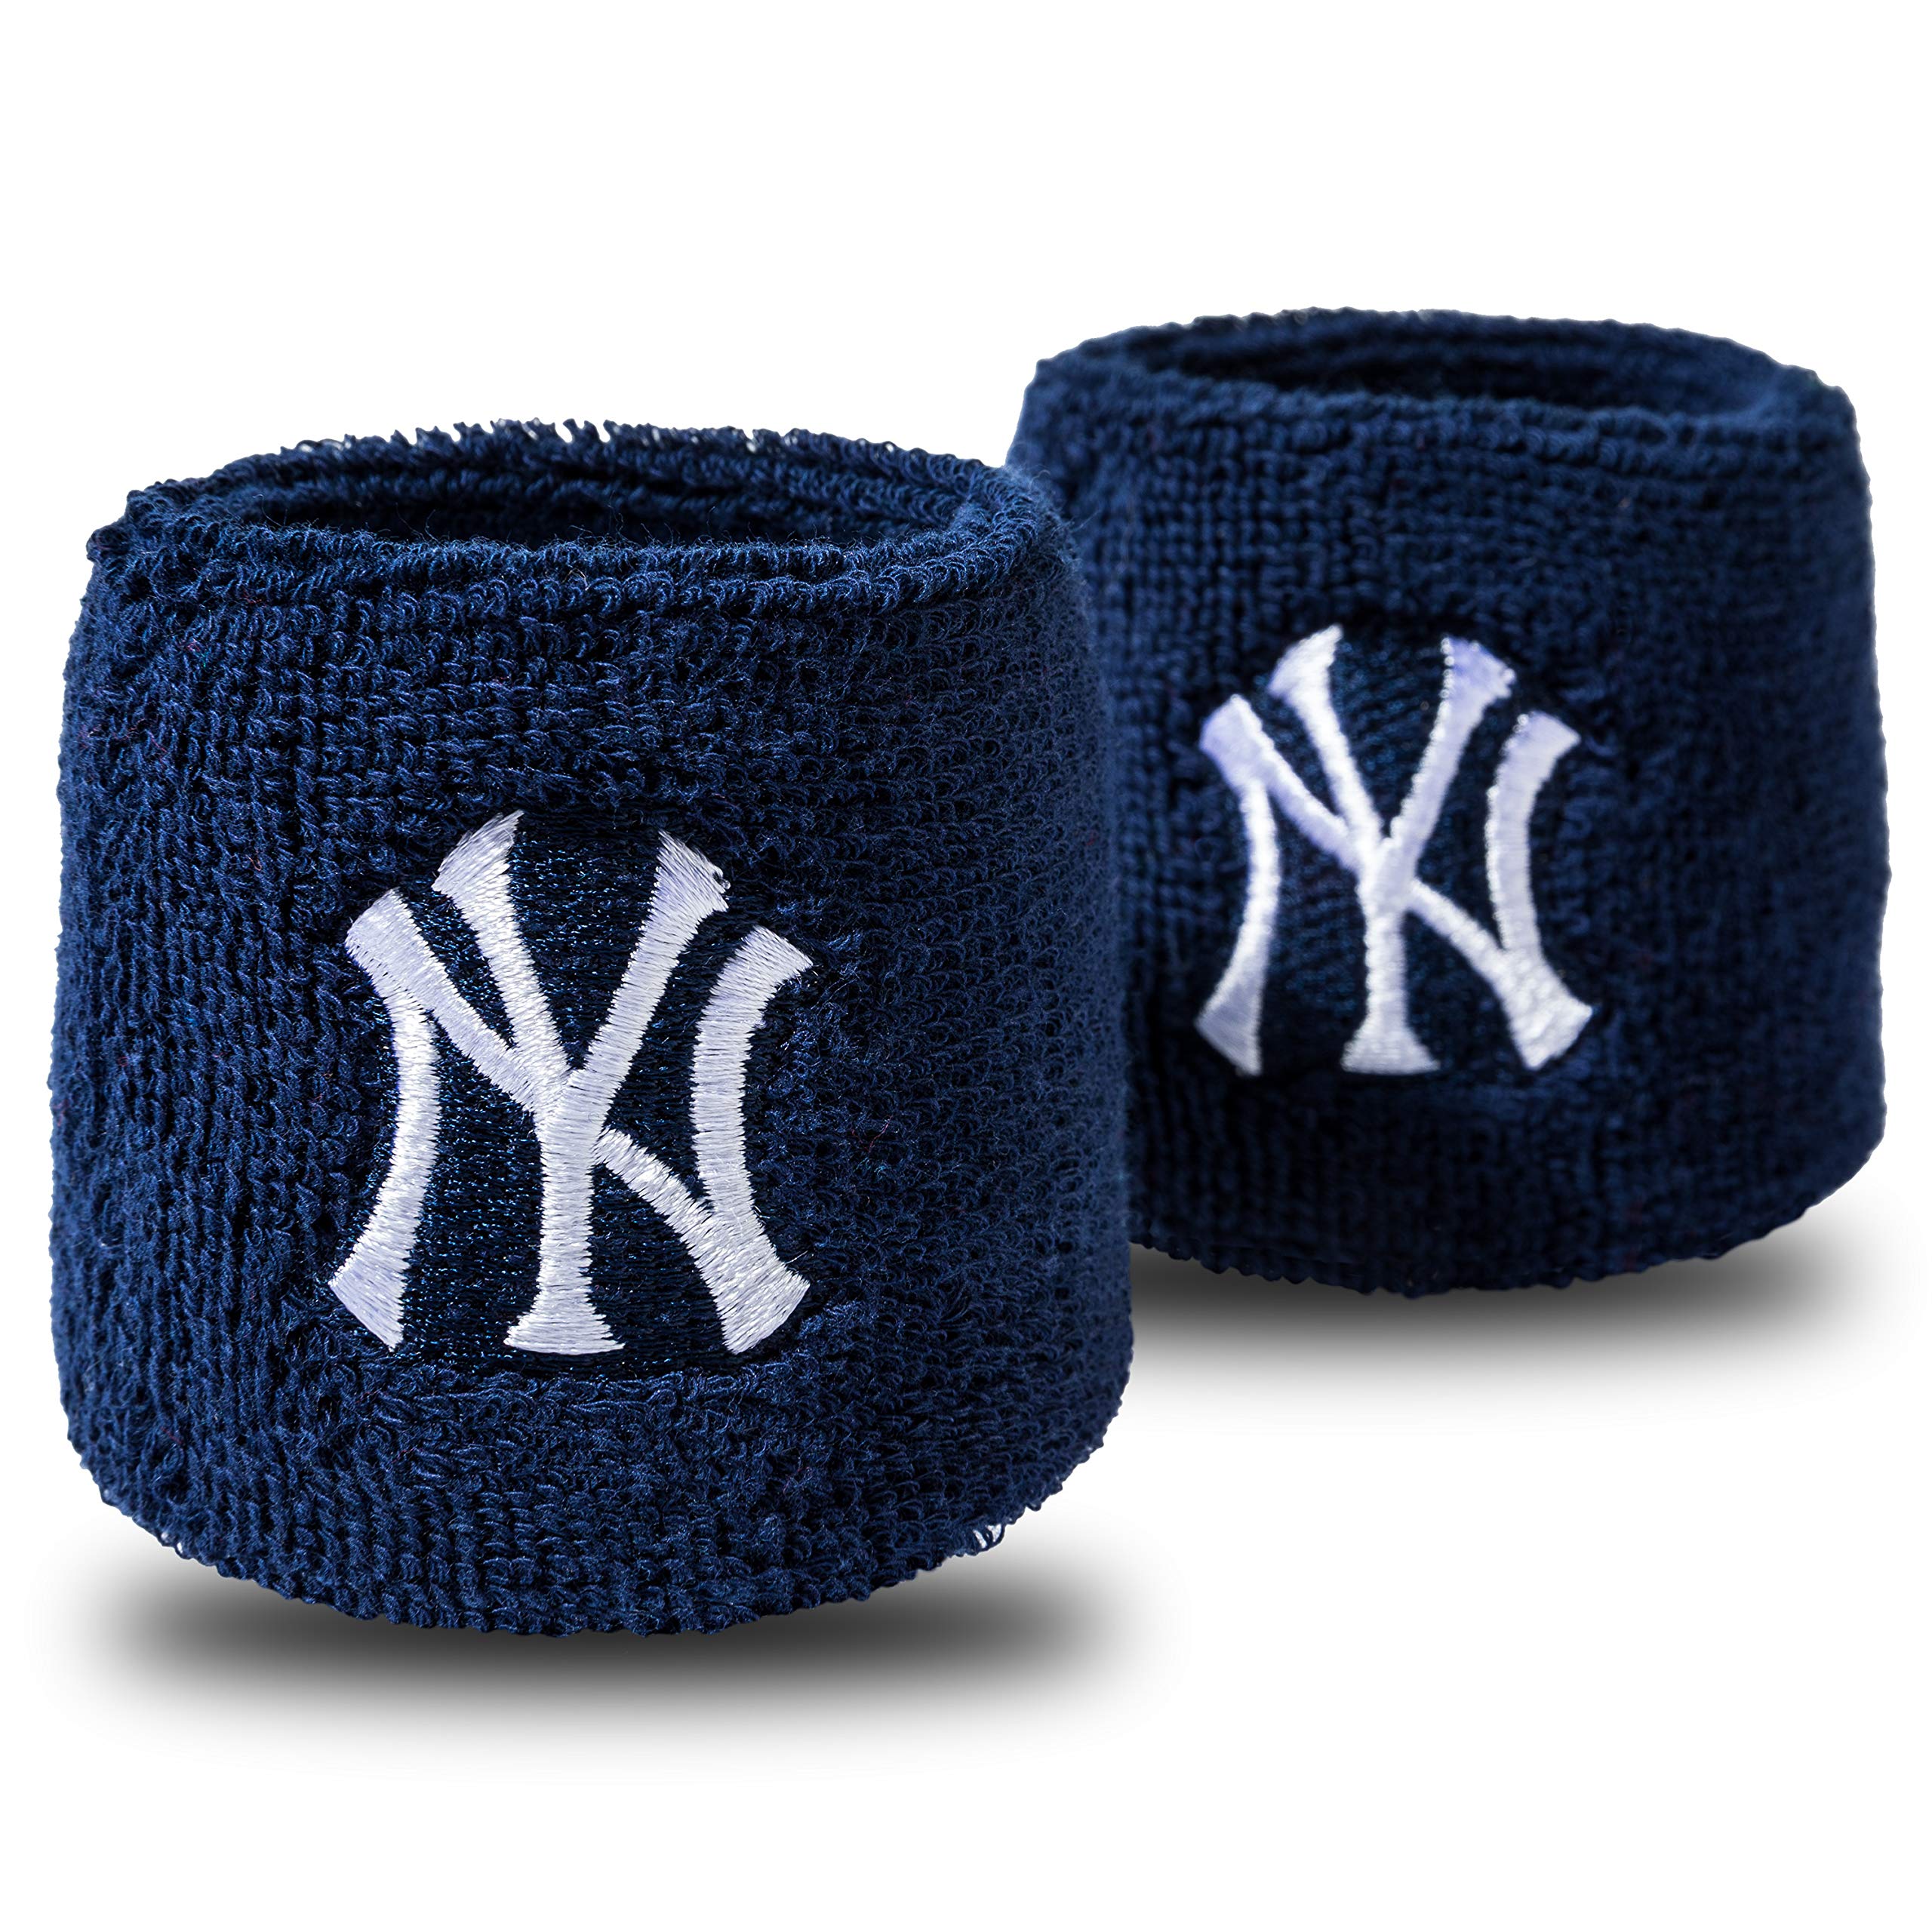 Franklin Sports MLB Team Licensed Baseball Wristbands - MLB Team Logo Sweat  Wristbands - Great for Costumes + Uniforms - Pair New York Yankees